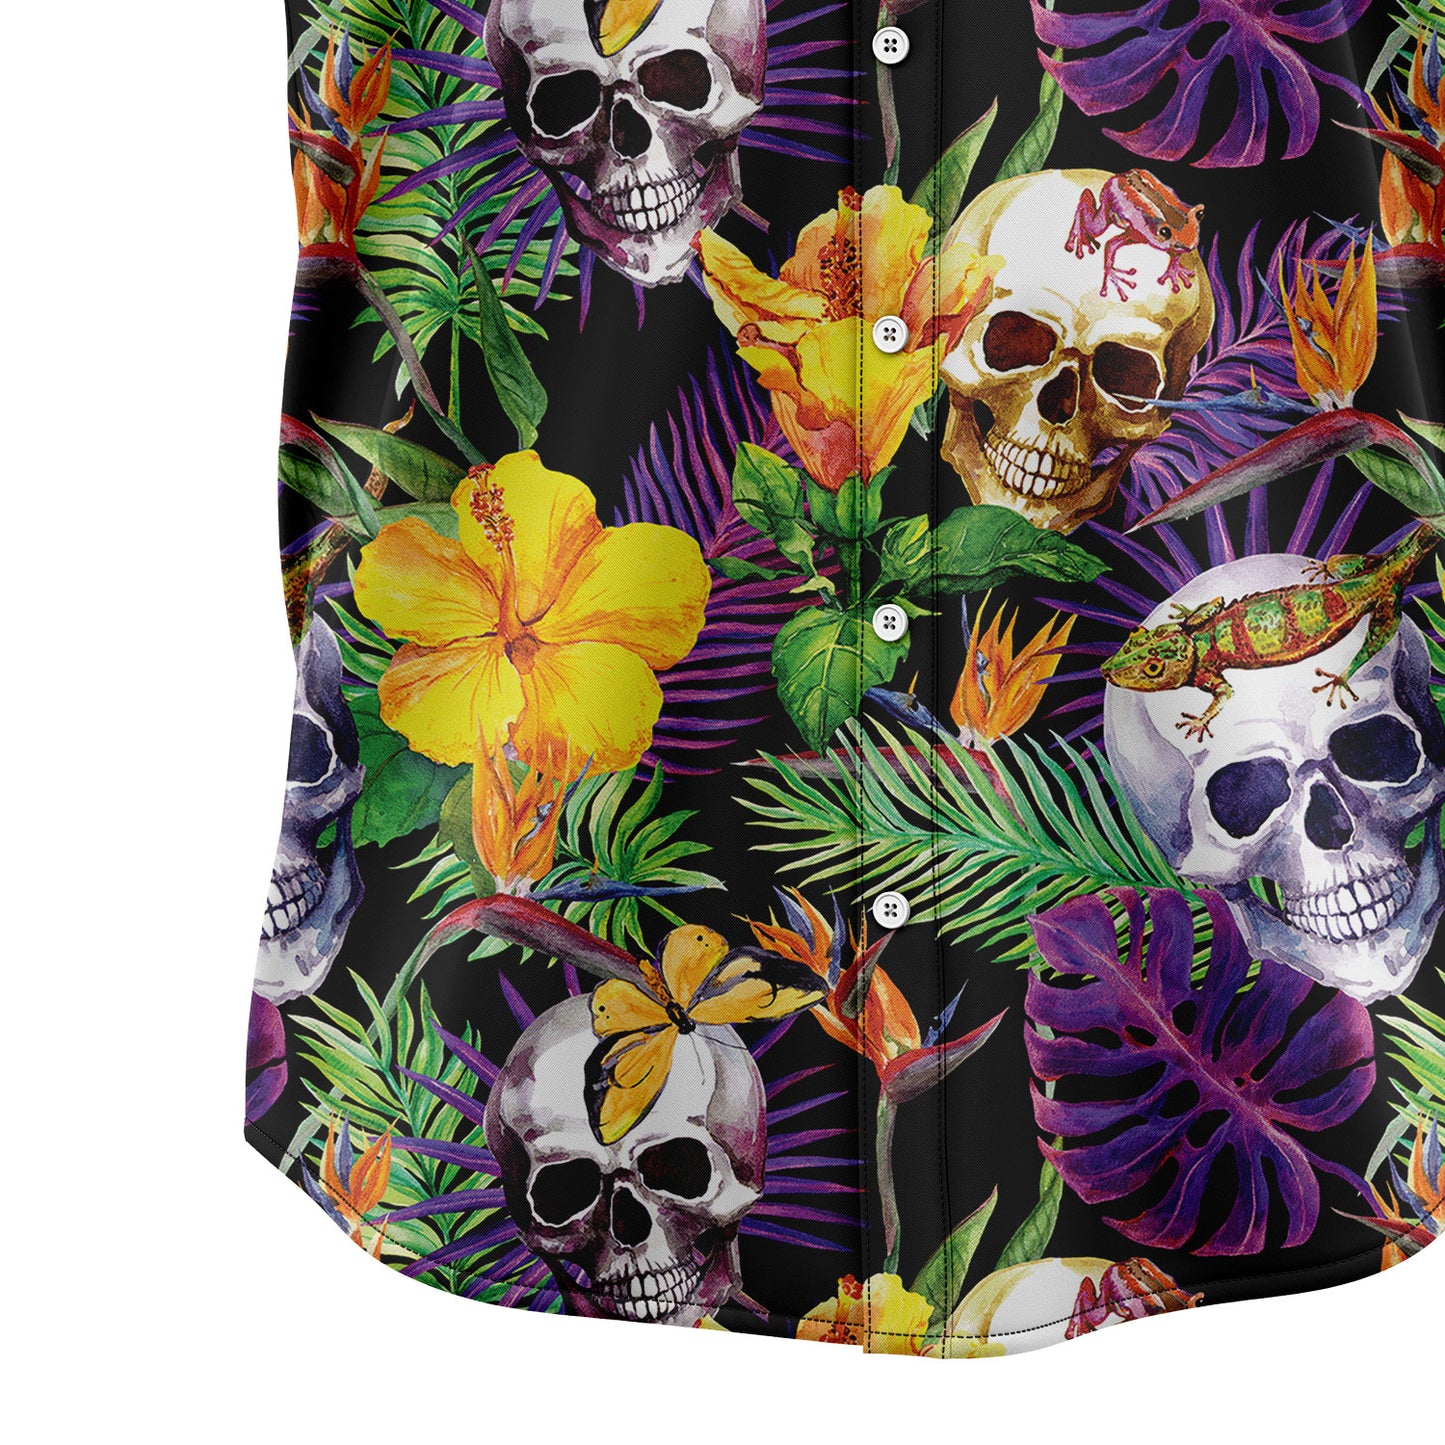 Skull Frangipani Flower T0307 - Hawaii Shirt